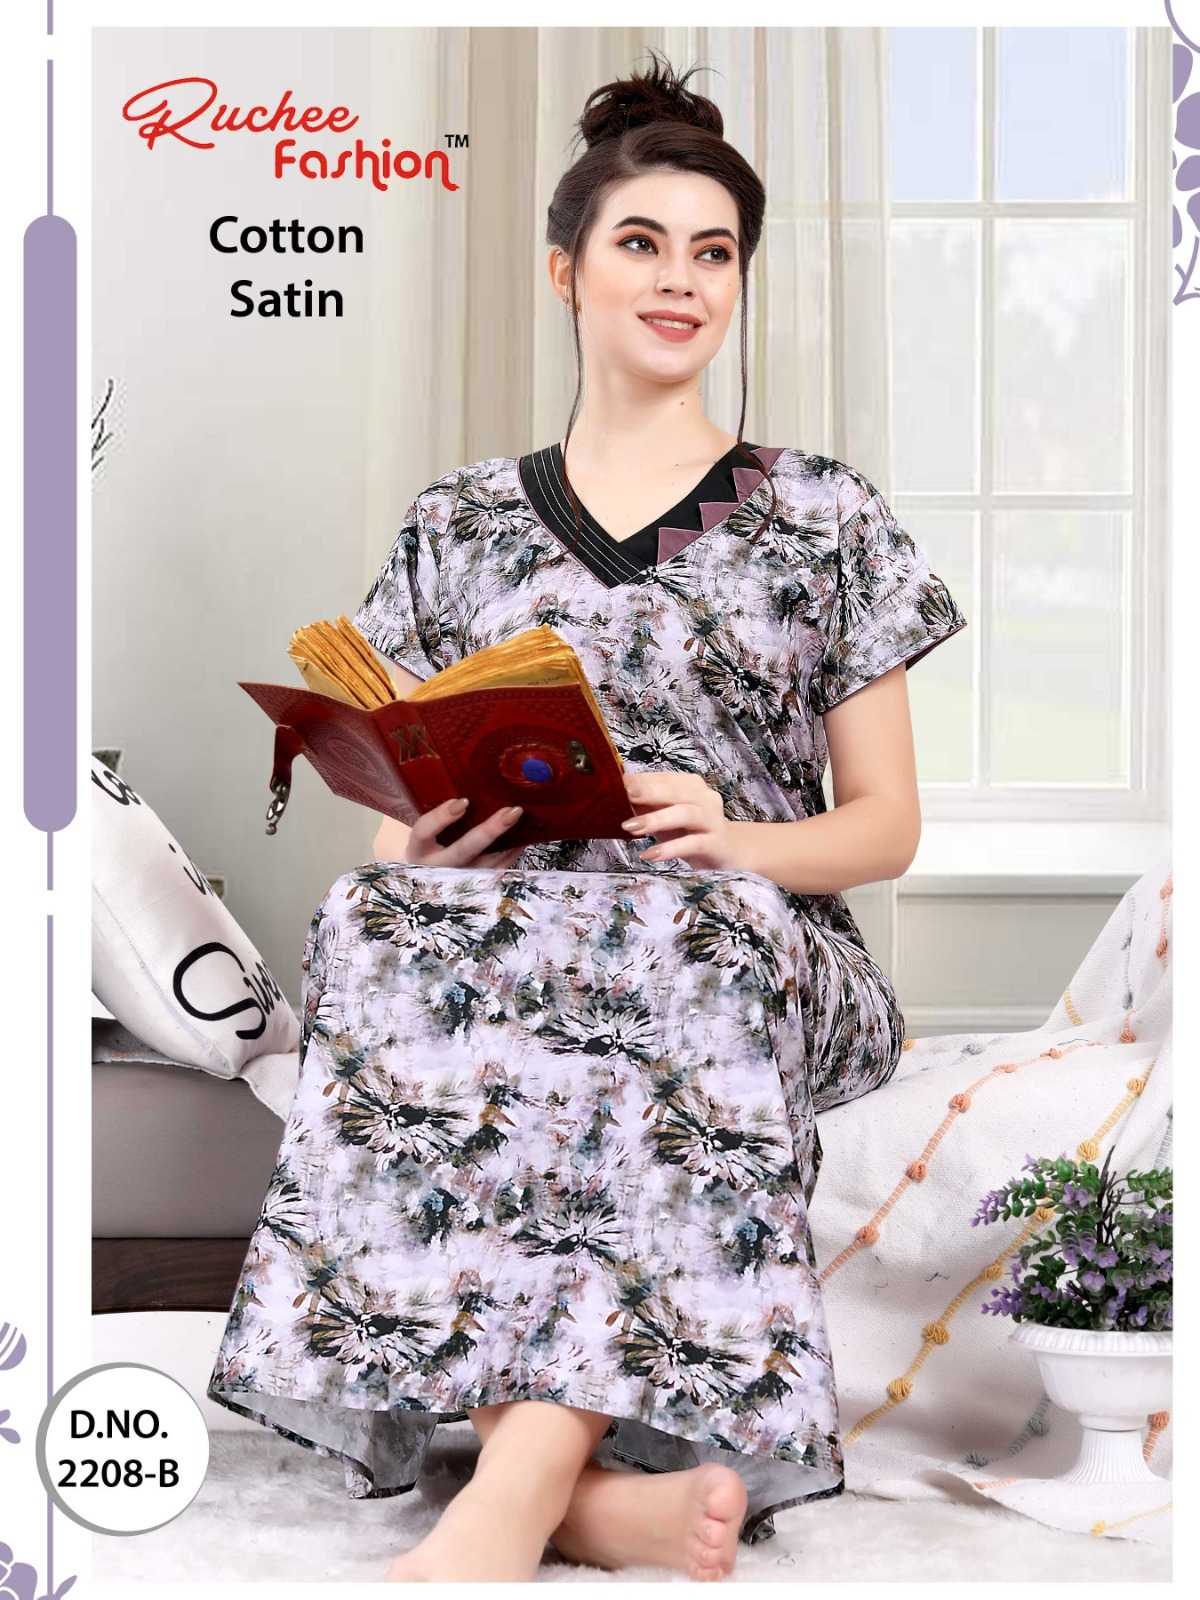 ruchee fashion cotton satin 2208-2209 beautiful night gown